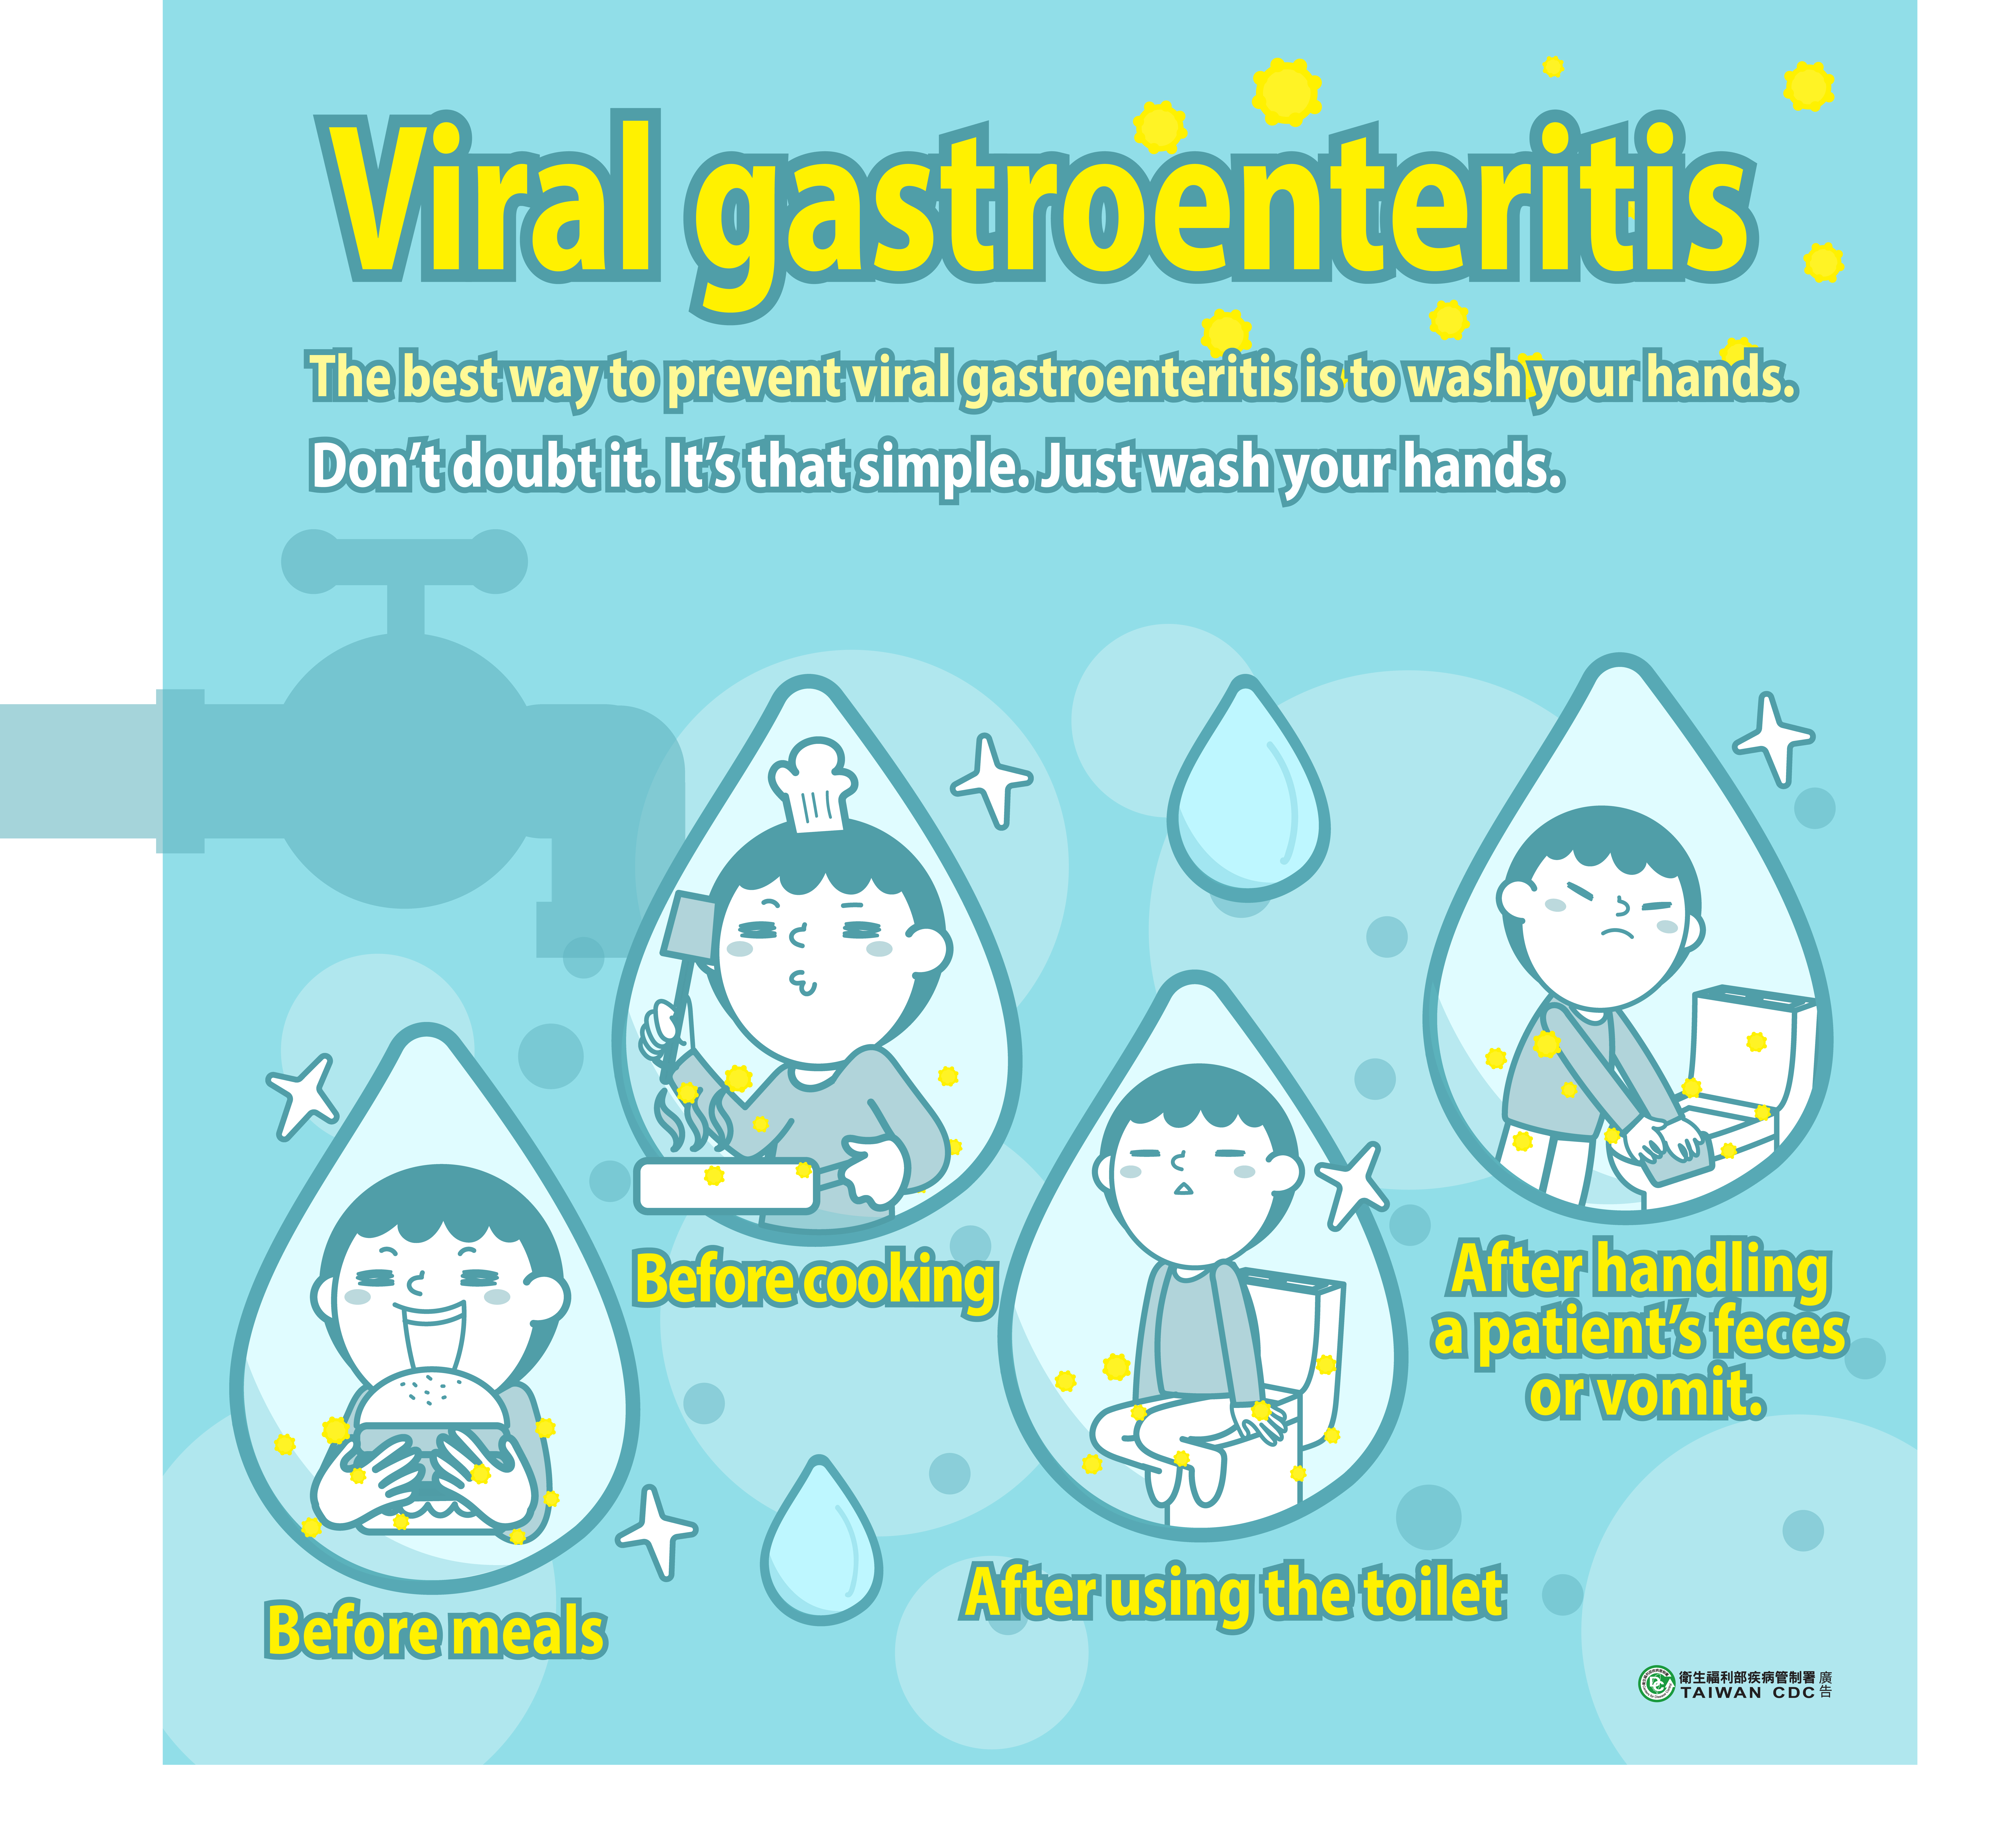 詳如附件【click me】The best way to prevent viral gastroenteritis is to wash your hands 病毒性腸胃炎沒有特效藥，洗手才是預防之道（英文）.jpg